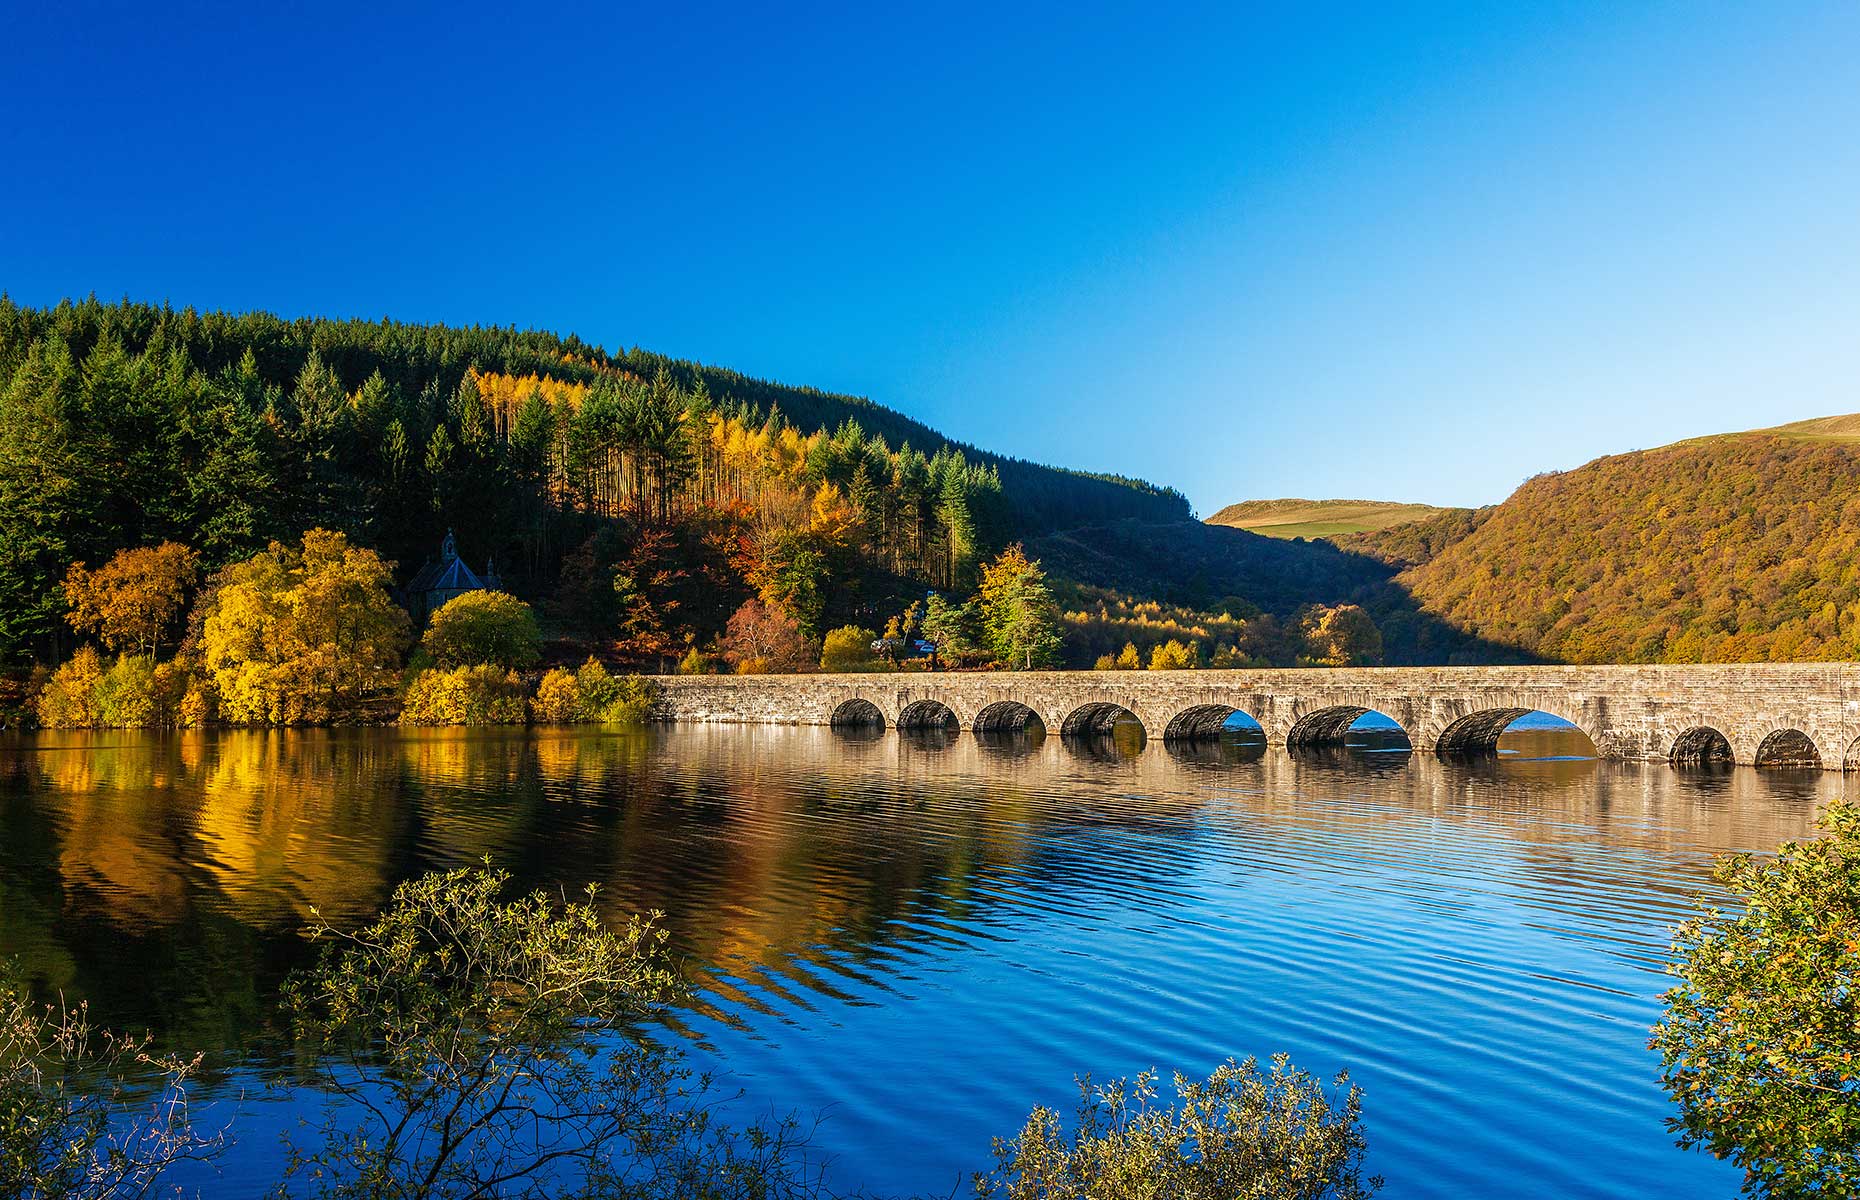 Elan Valley, Powys, Wales (Image: Billy Stock/Shutterstock)